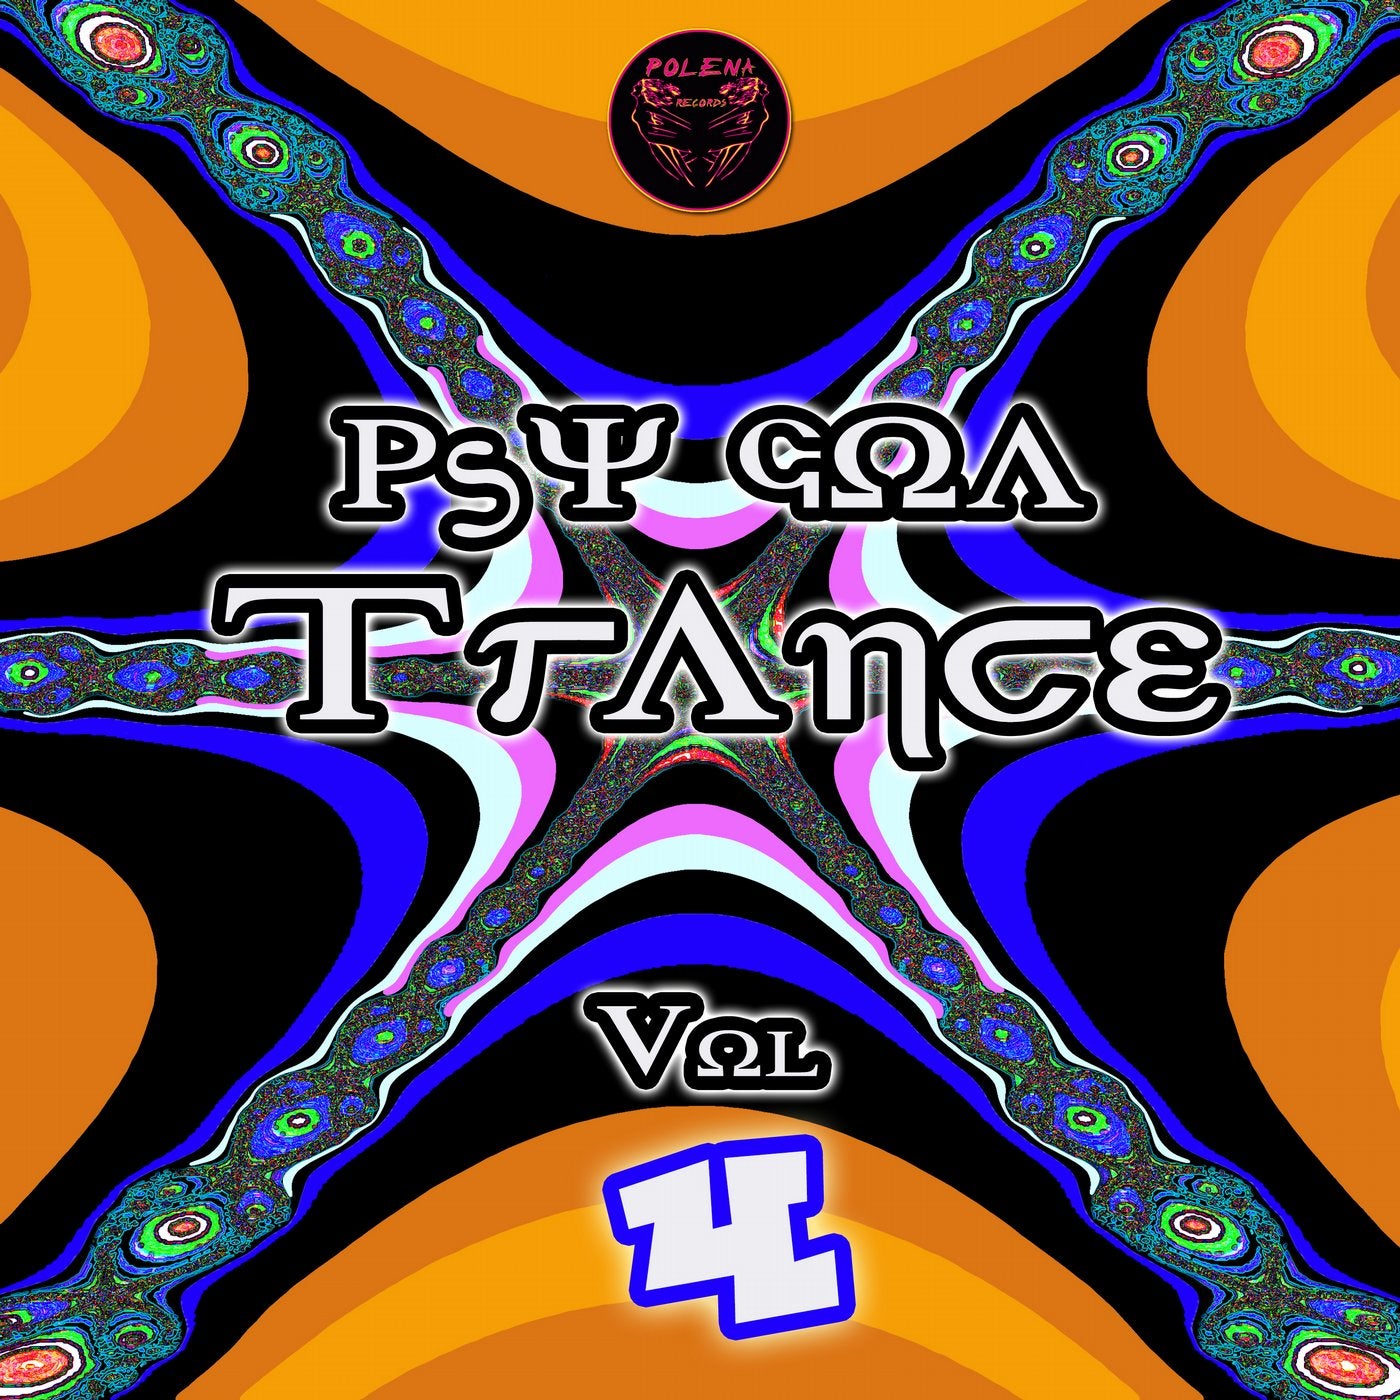 Psy Goa Trance, Vol. 4